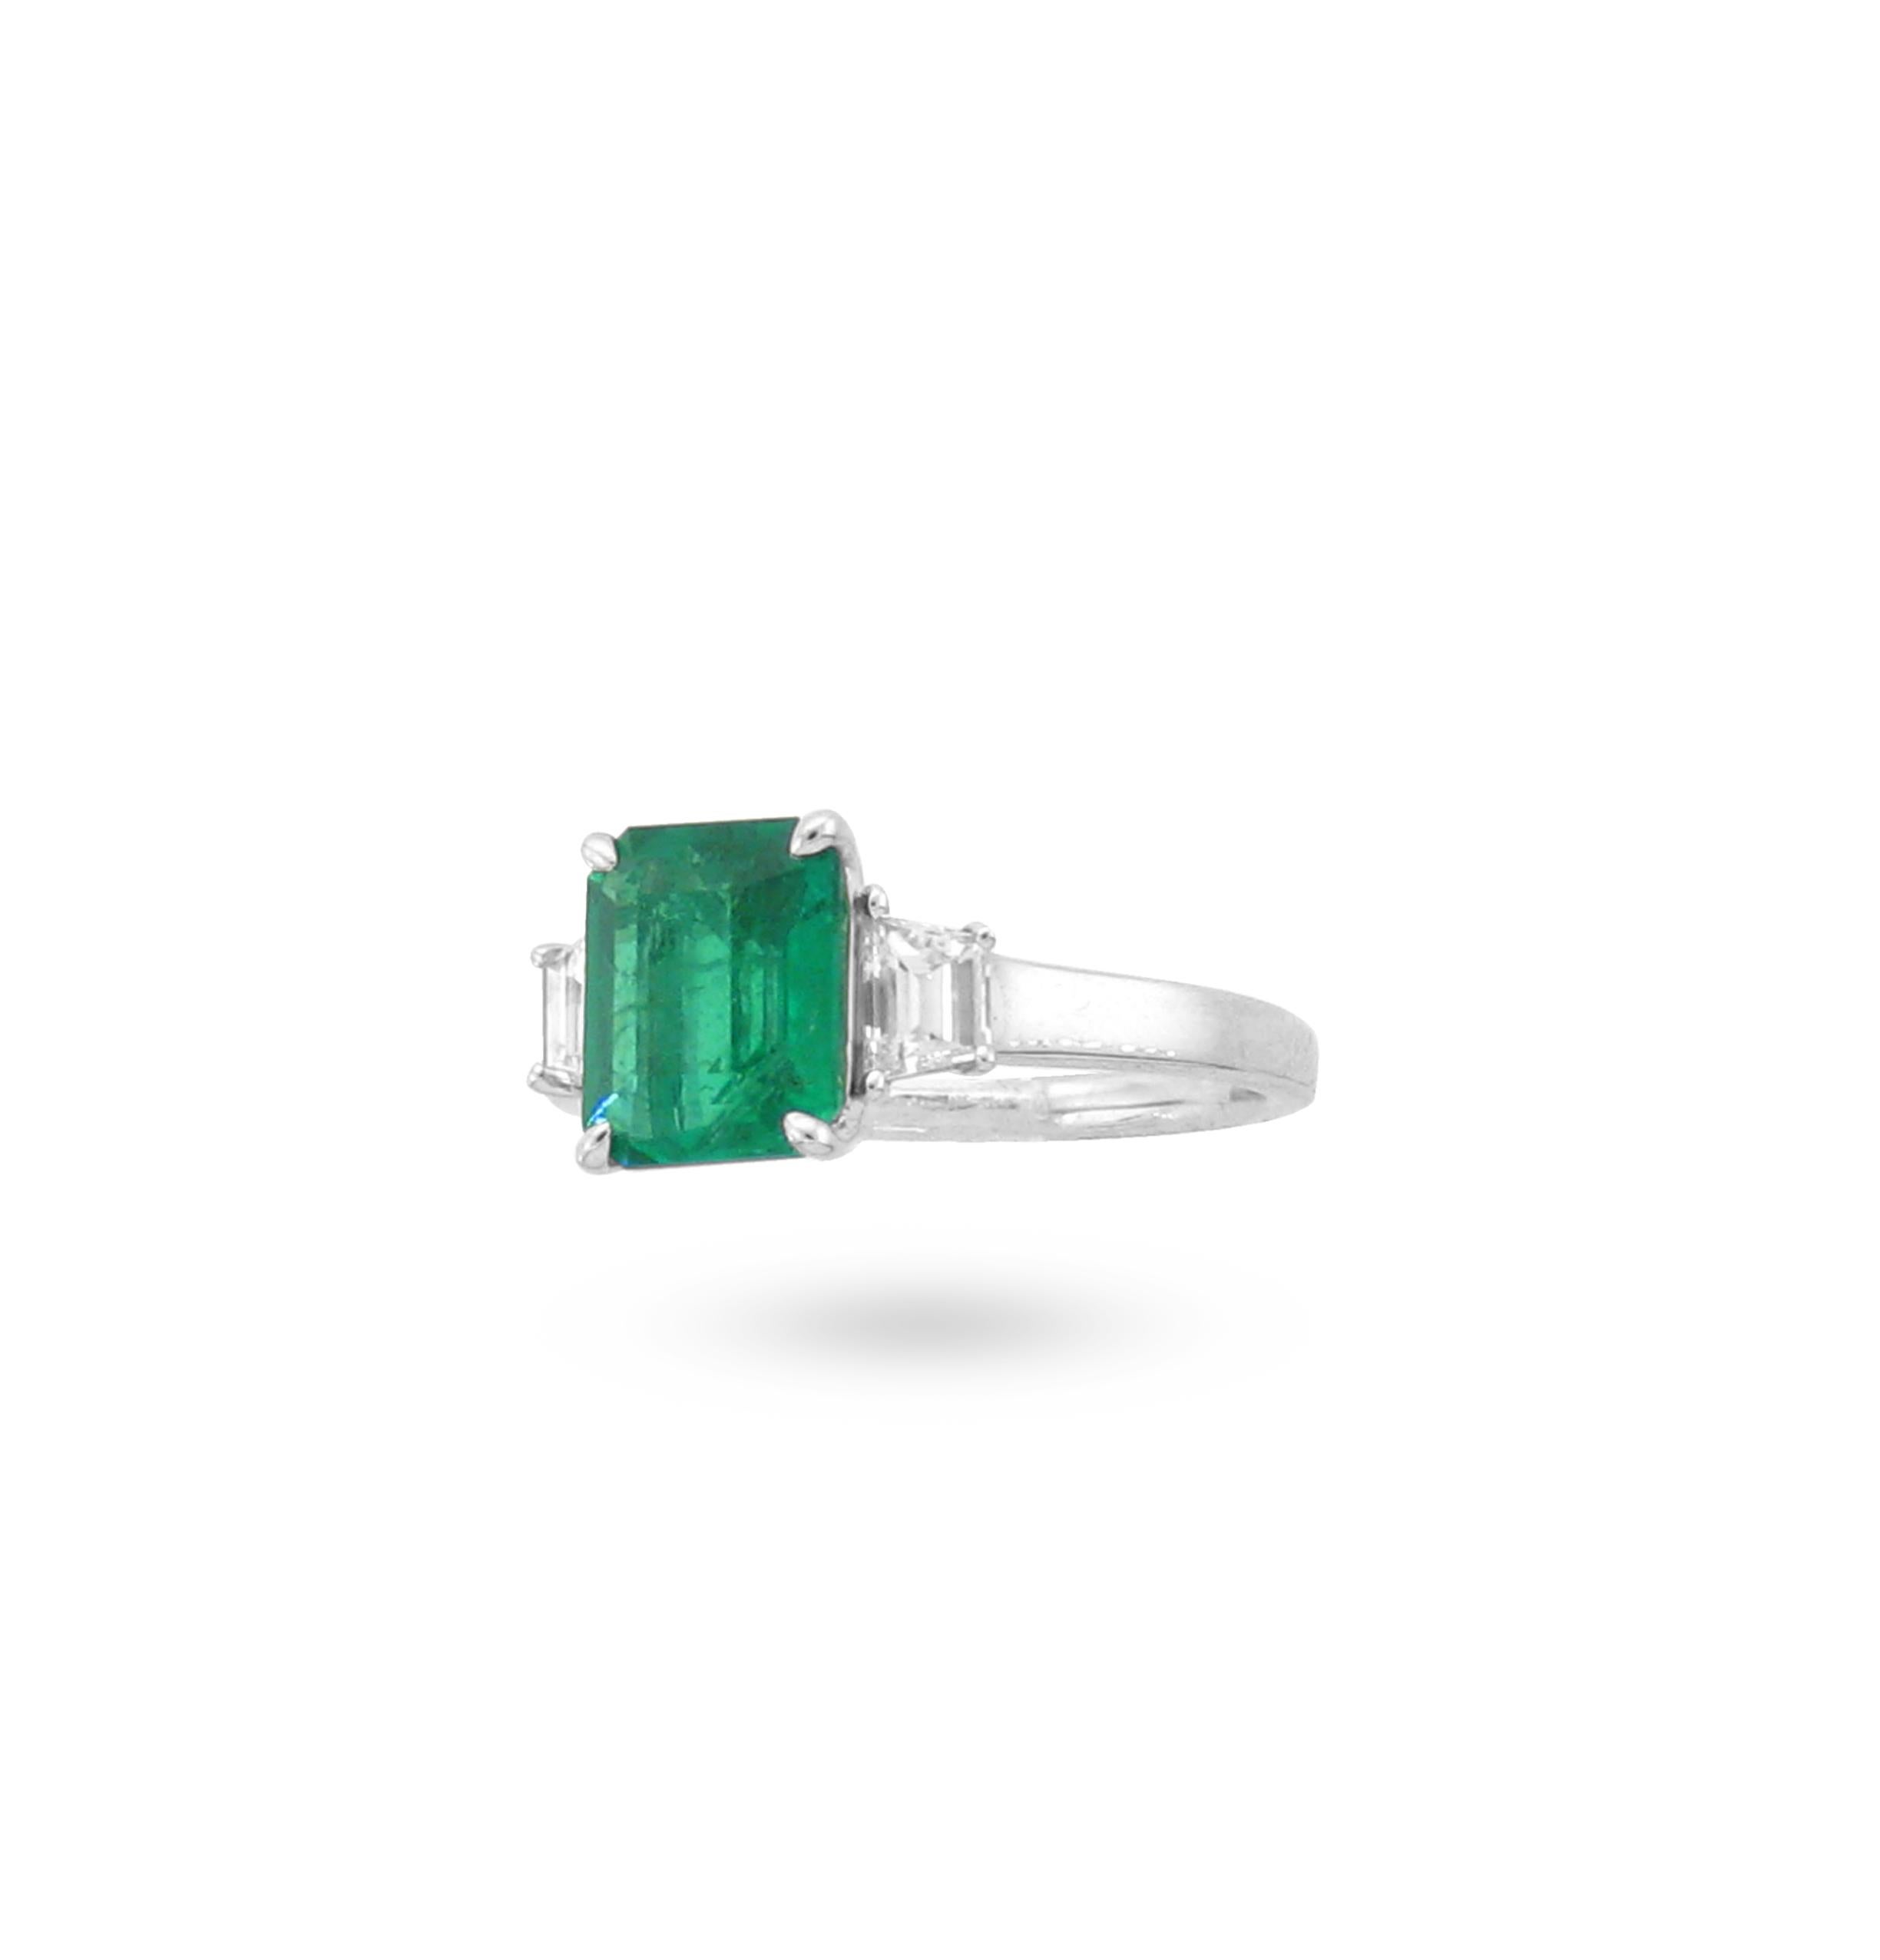 3 Stone Emerald Ring

Emerald Cut Emerald - 2.47ct
Trapezoid Diamonds - .60ct
Ring Metal - 18kwg